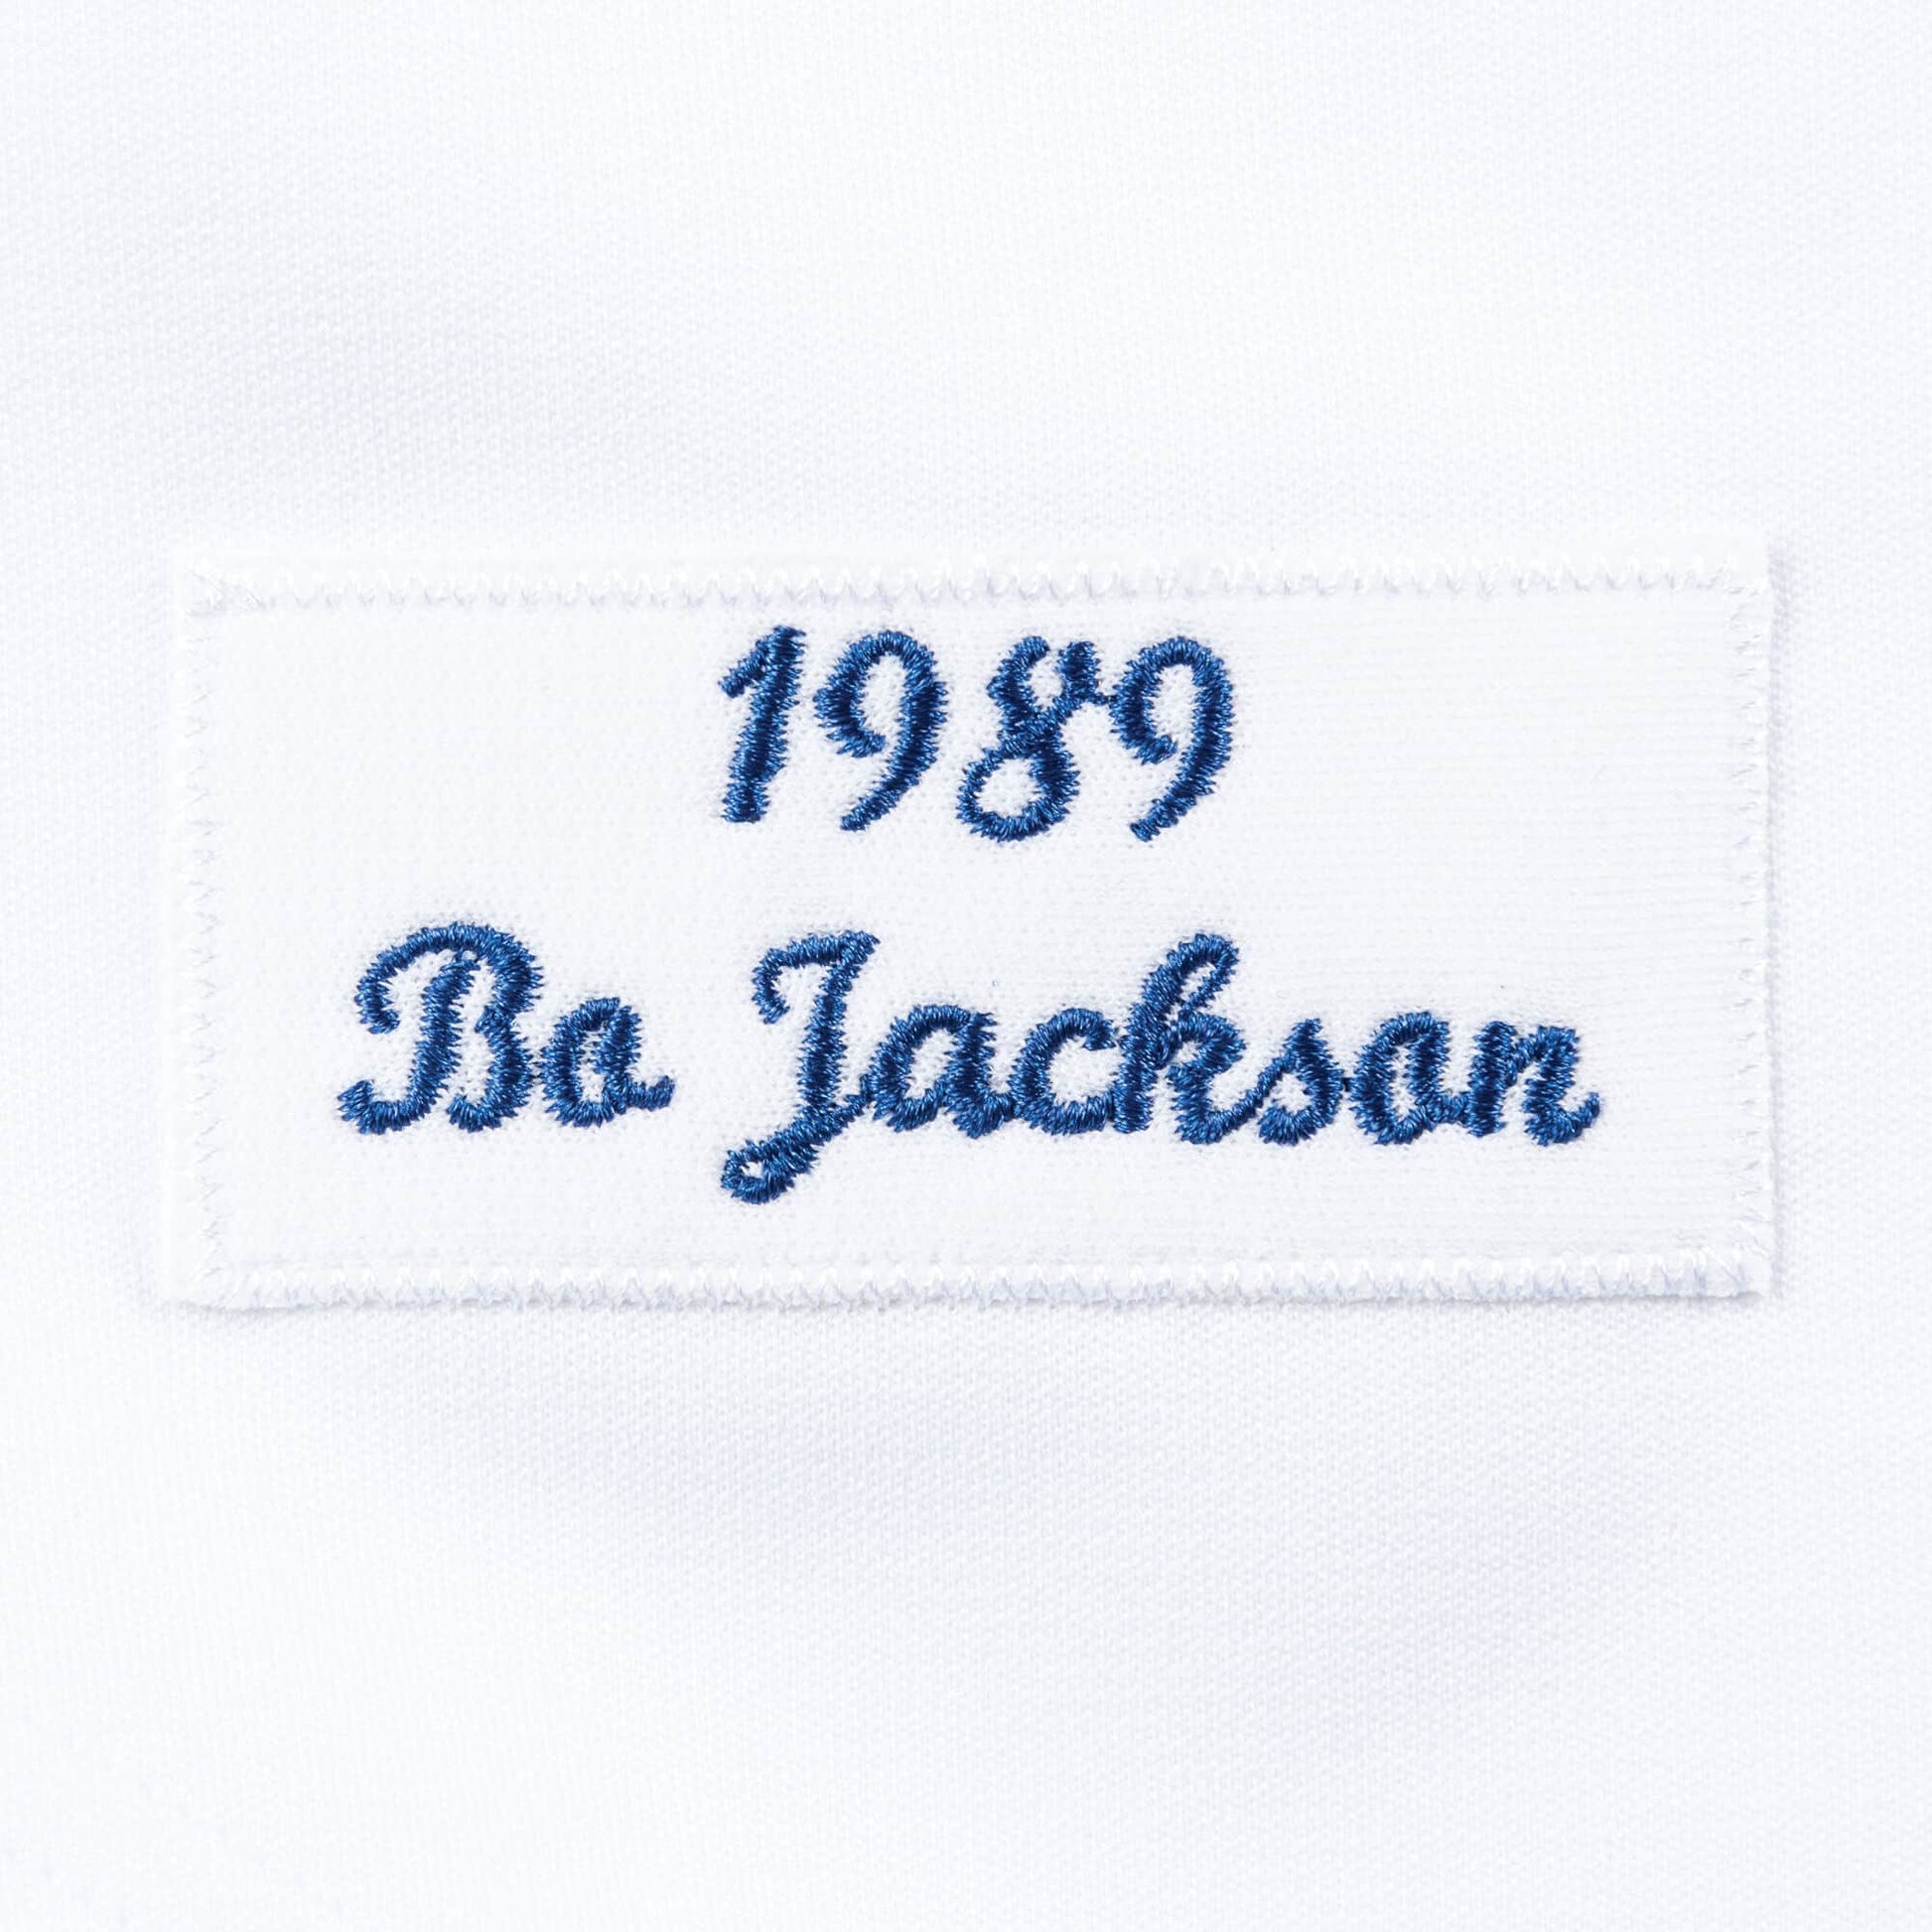 Authentic Jersey Kansas City Royals Home 1989 Bo Jackson